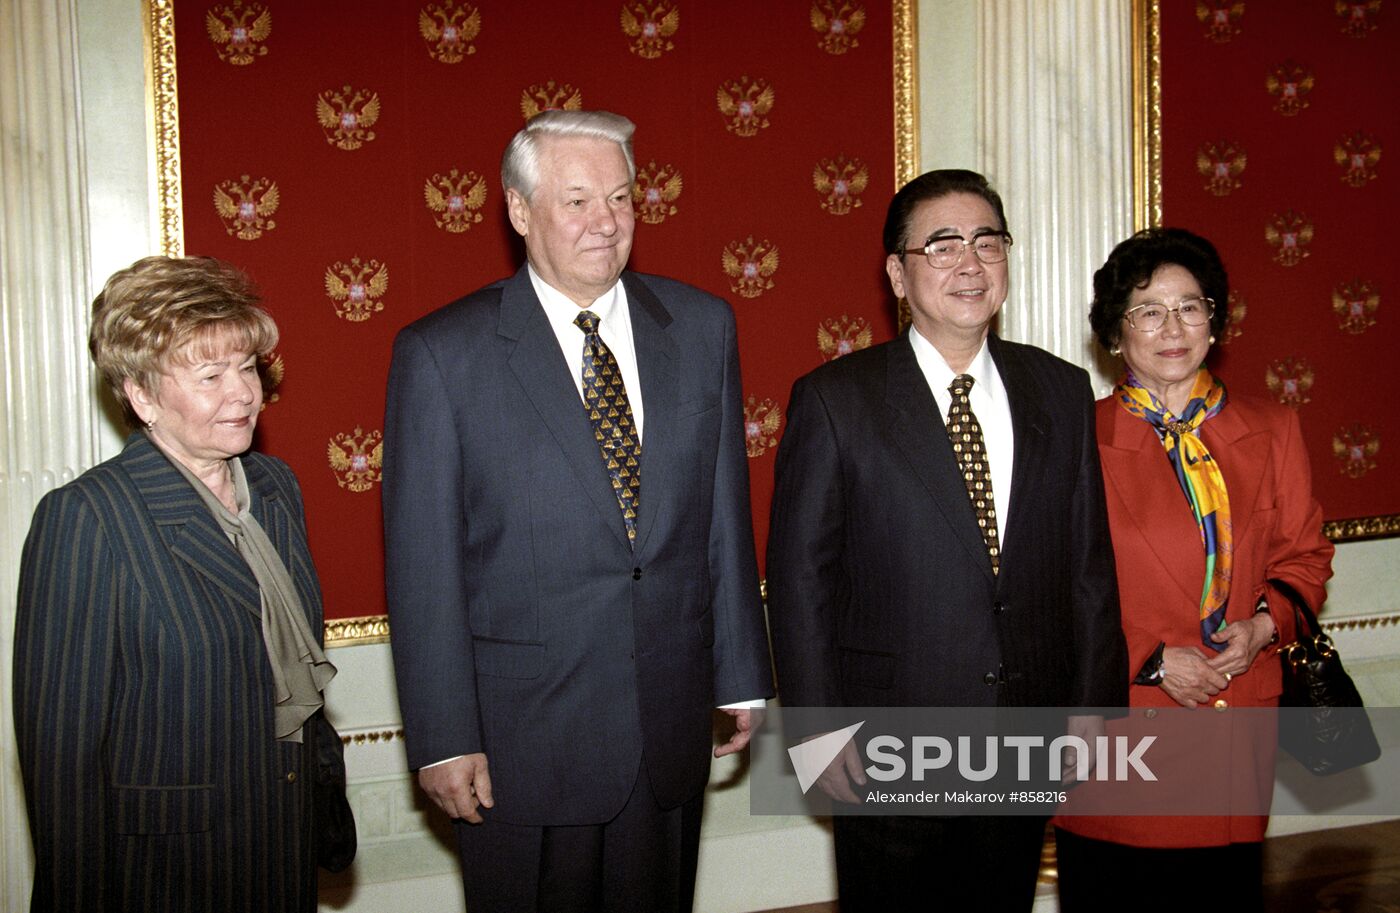 Boris Yeltsin and Li Peng and their wives